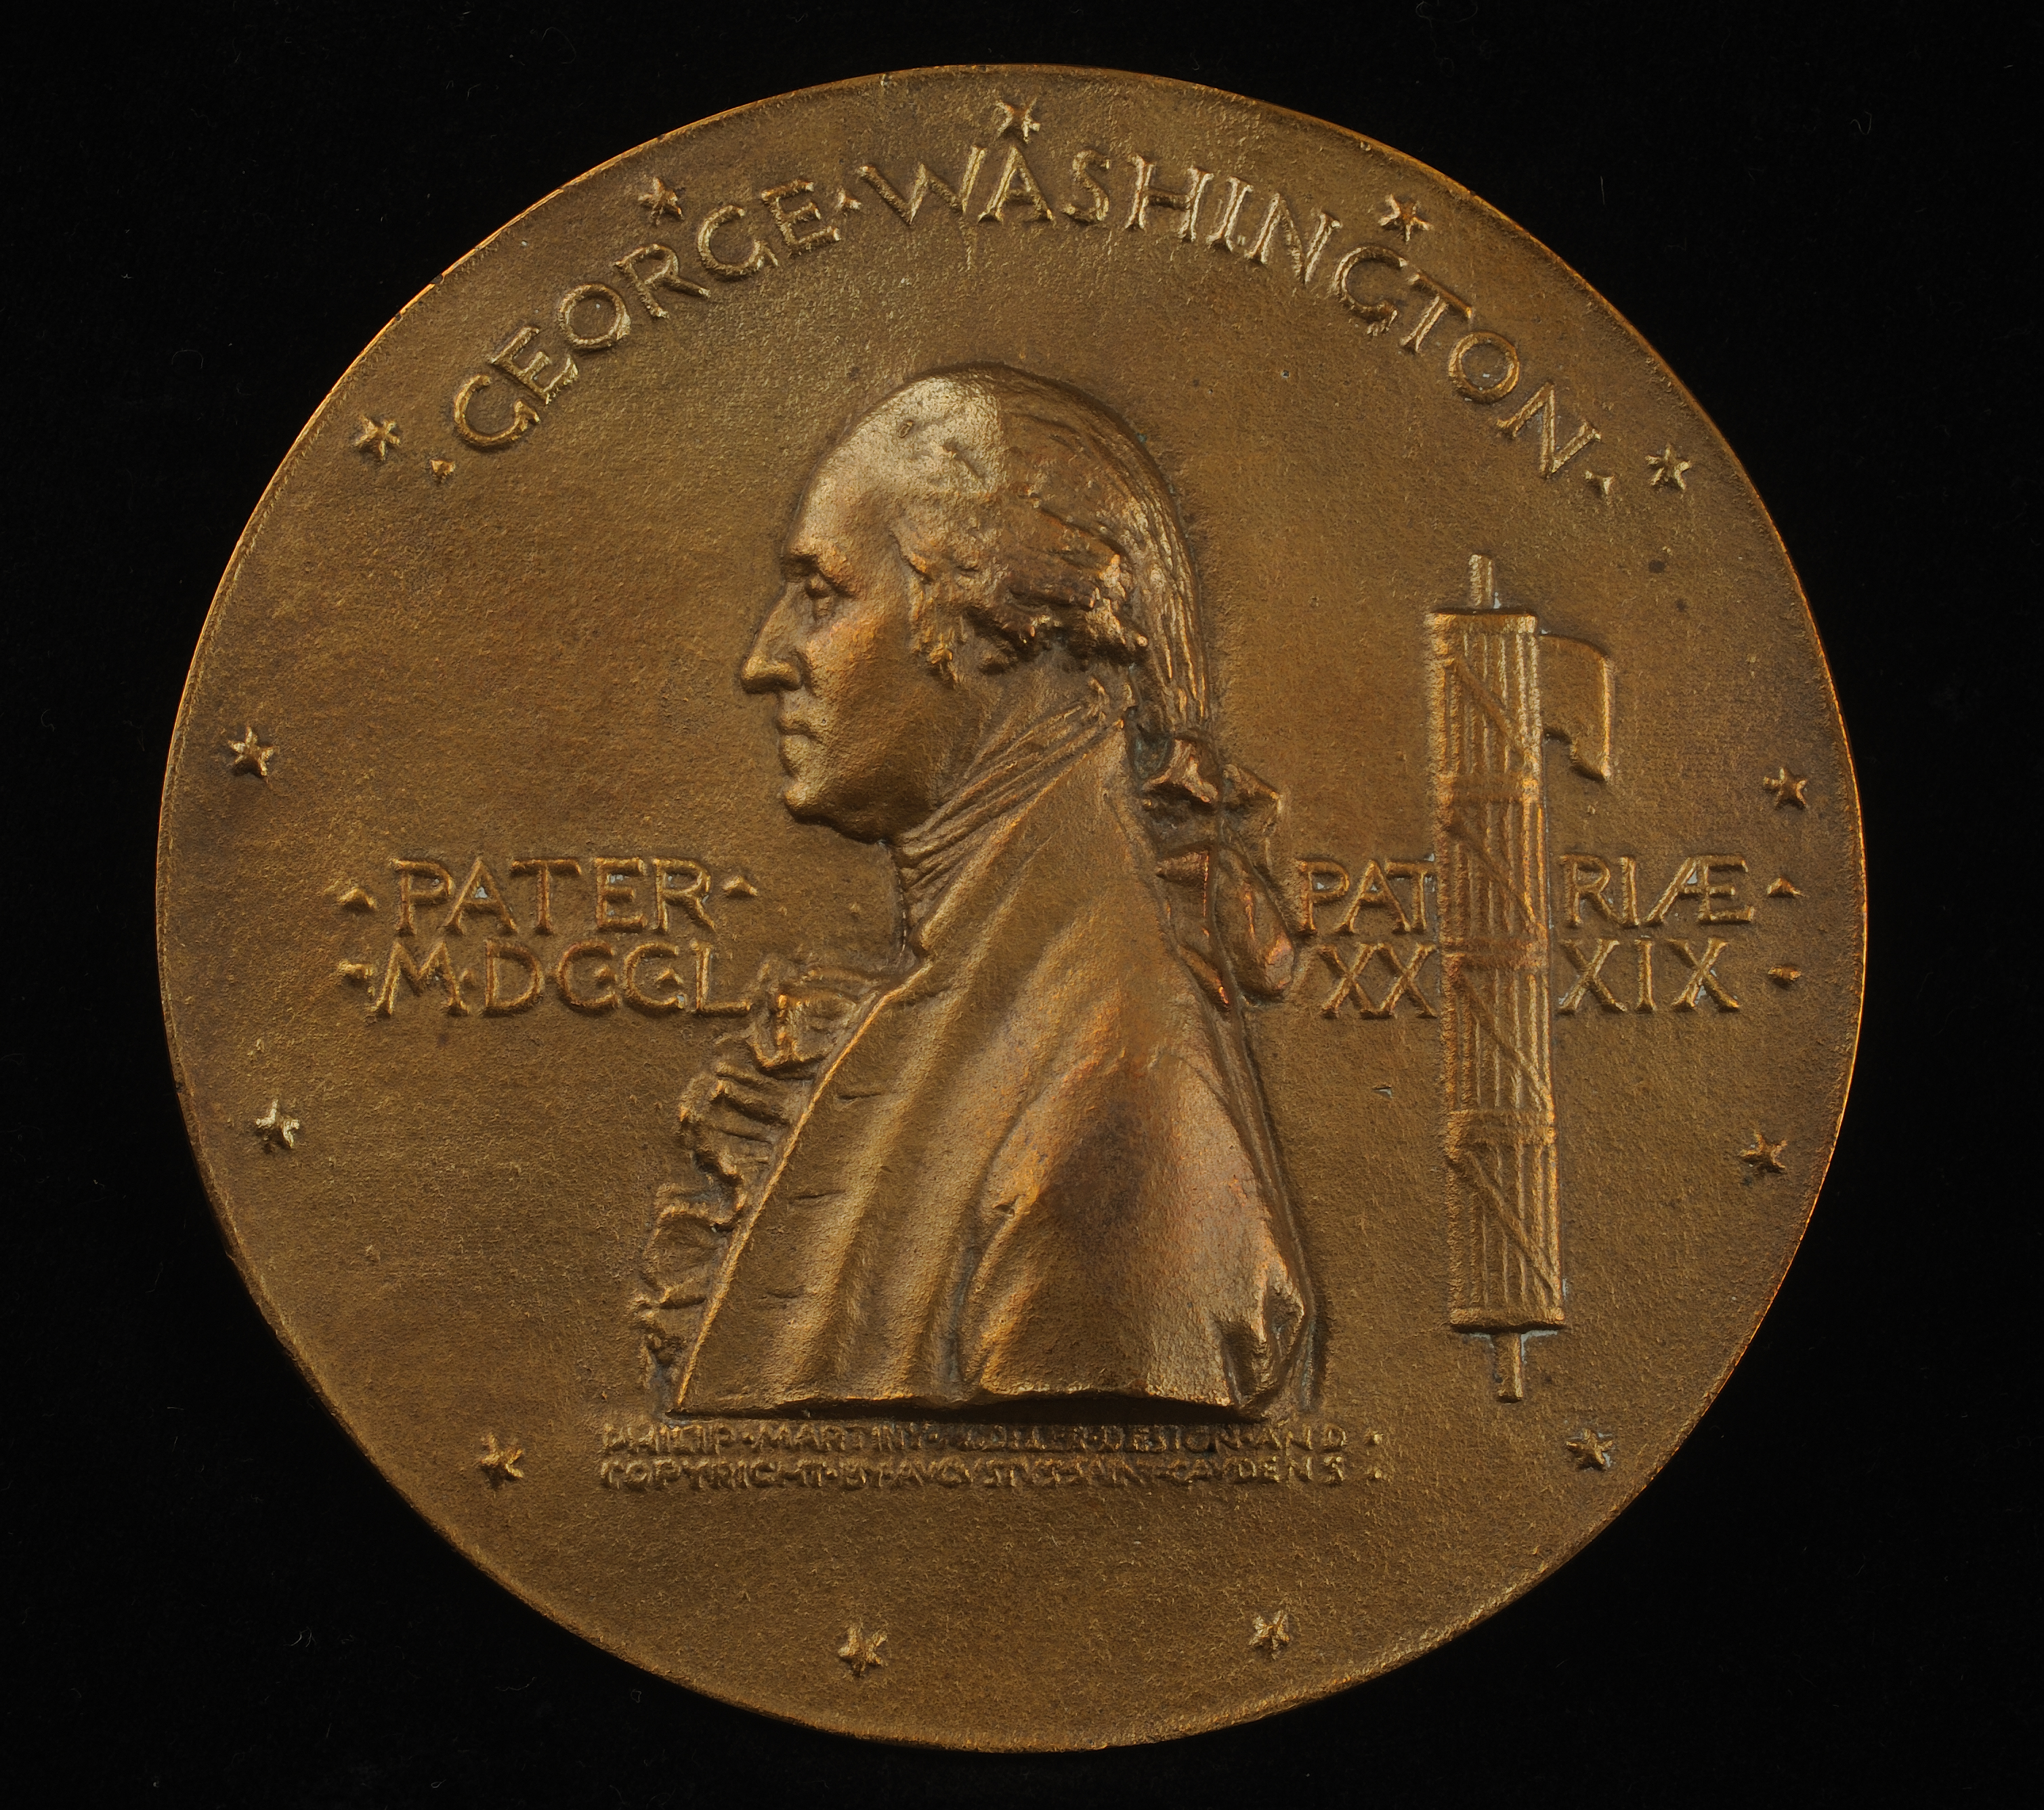 George Washington inauguration medal, 1889